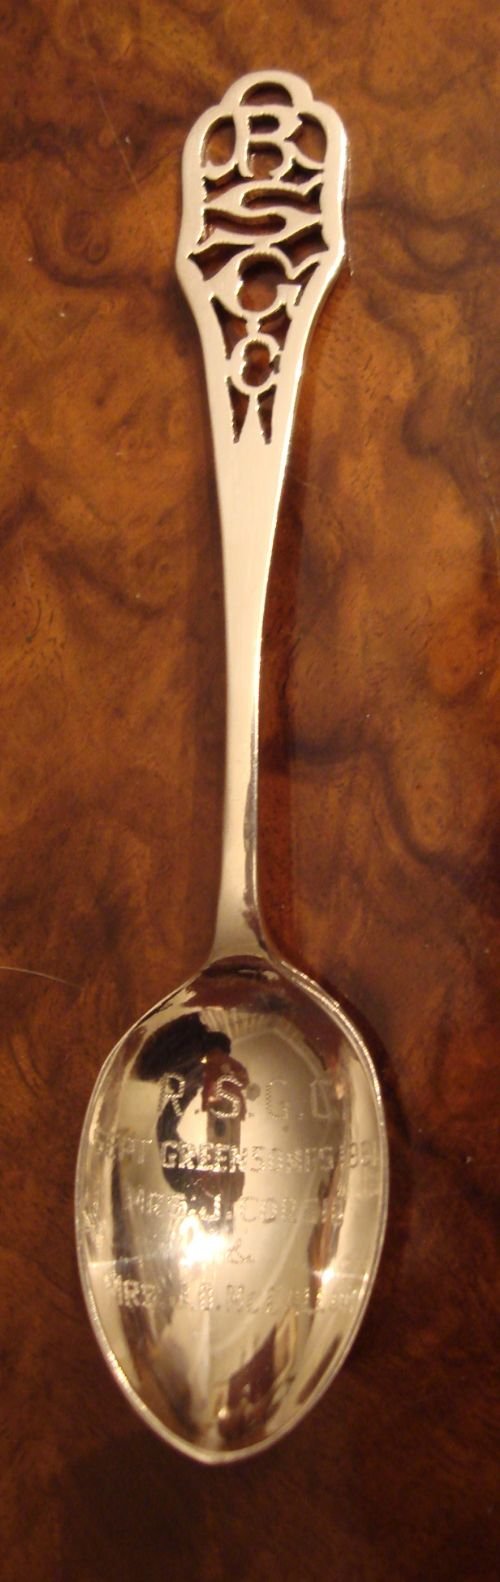 unusual solid silver golf spoon hallmarked sheffield 1960 with pierced stem